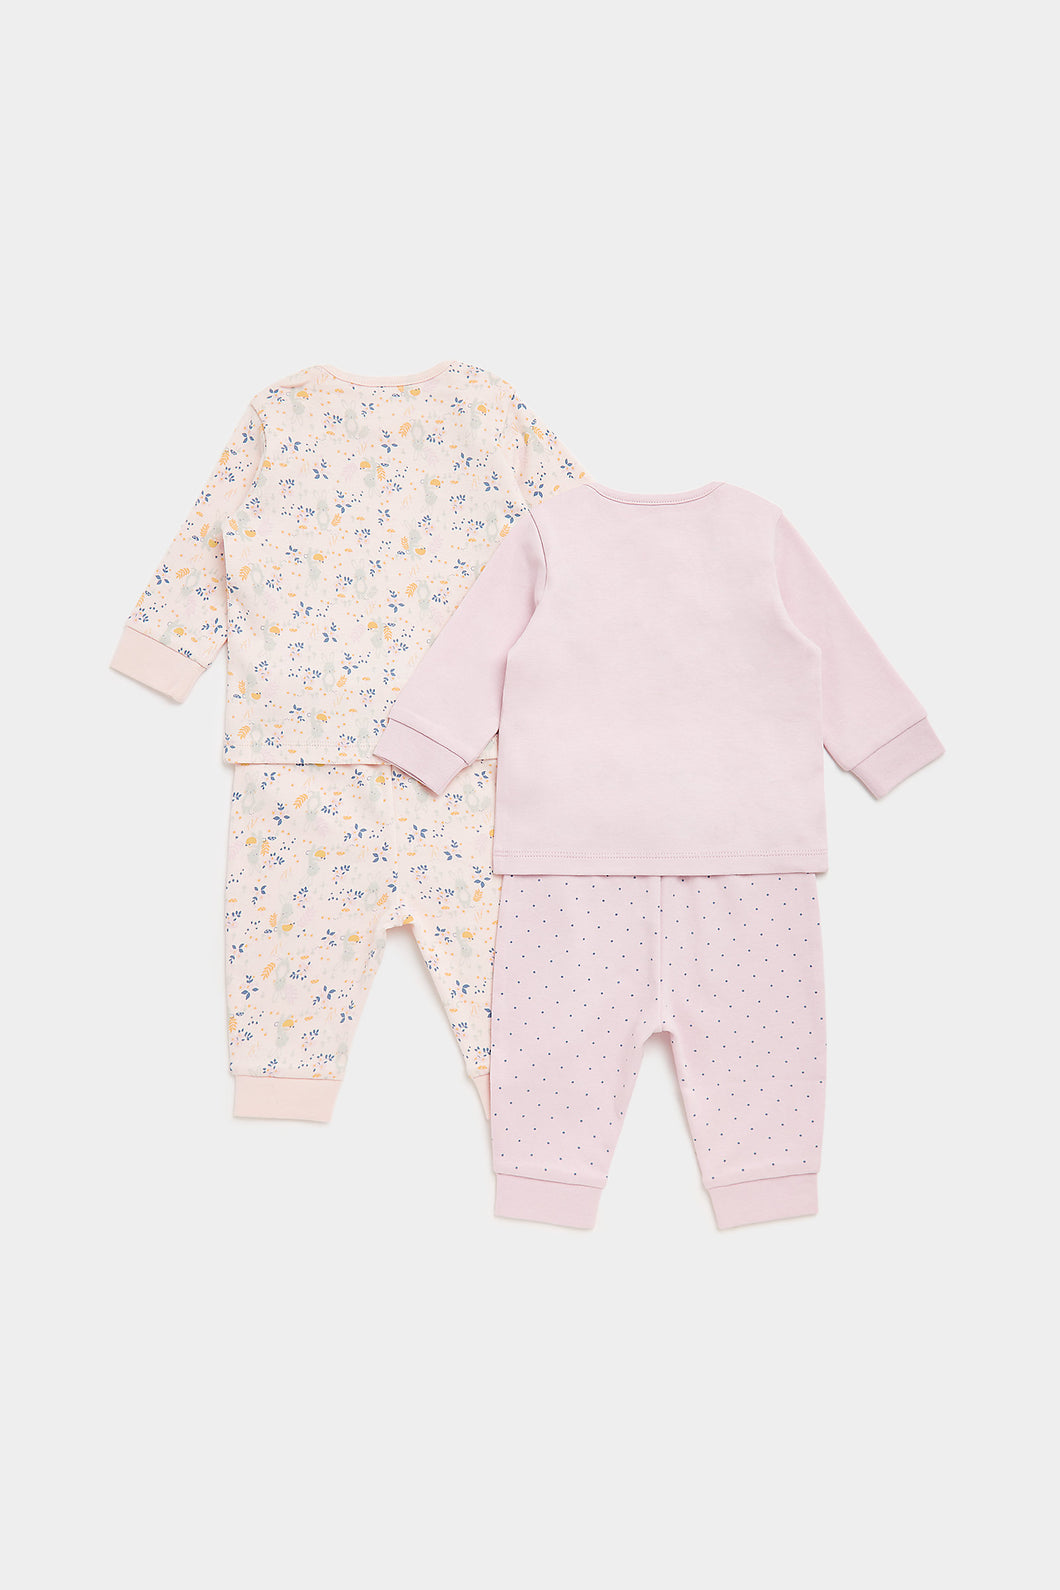 Mothercare Bunny Baby Pyjamas - 2 Pack